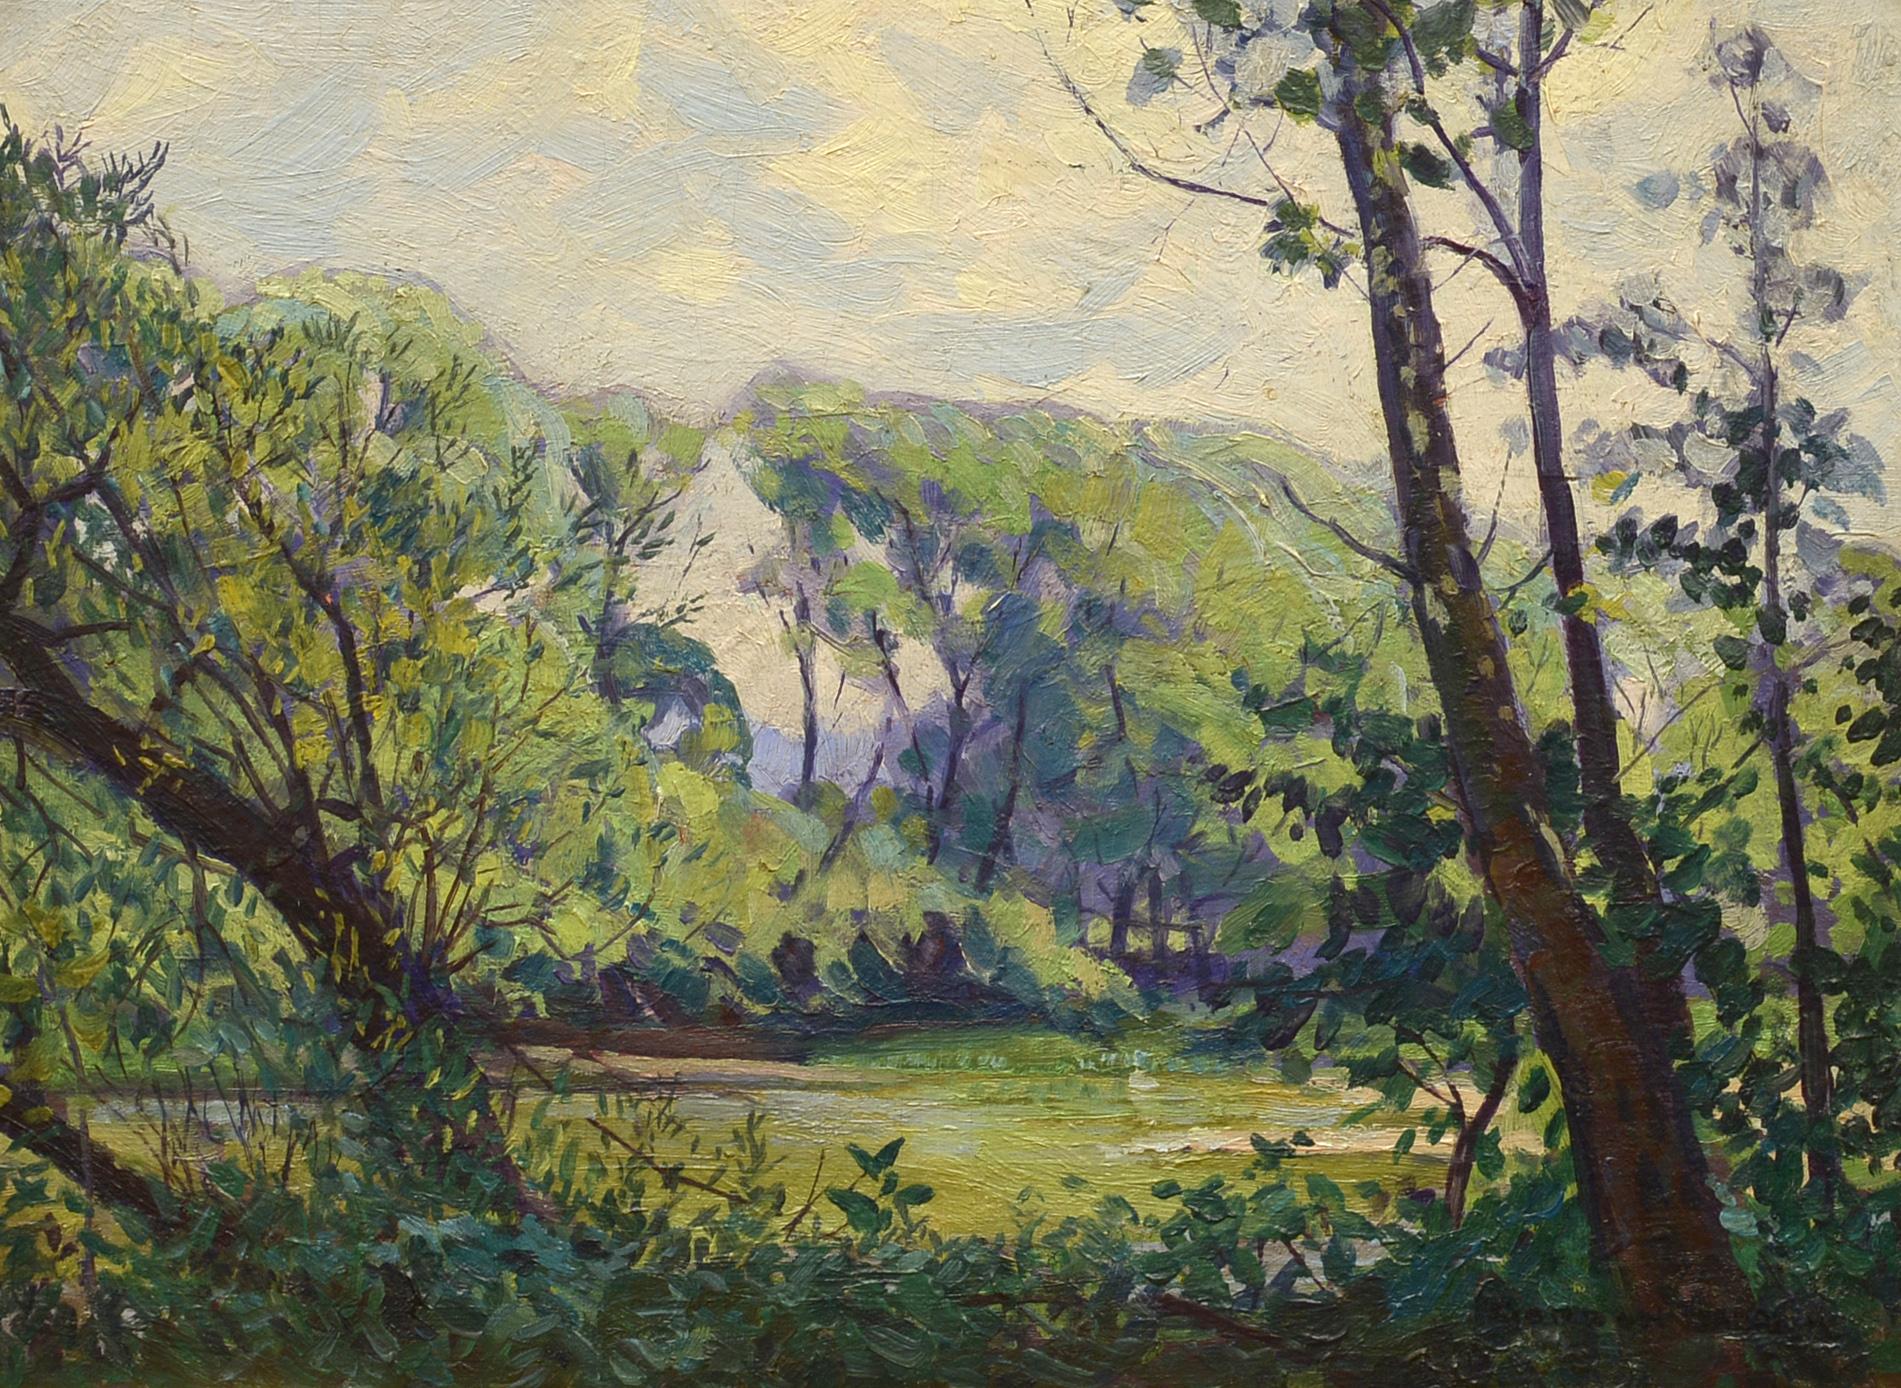 Shirley Gordon Barrick Landscape Painting - "Along the River, " Shirley Barrick, oil, landscape, impressionist, ca 1920-30